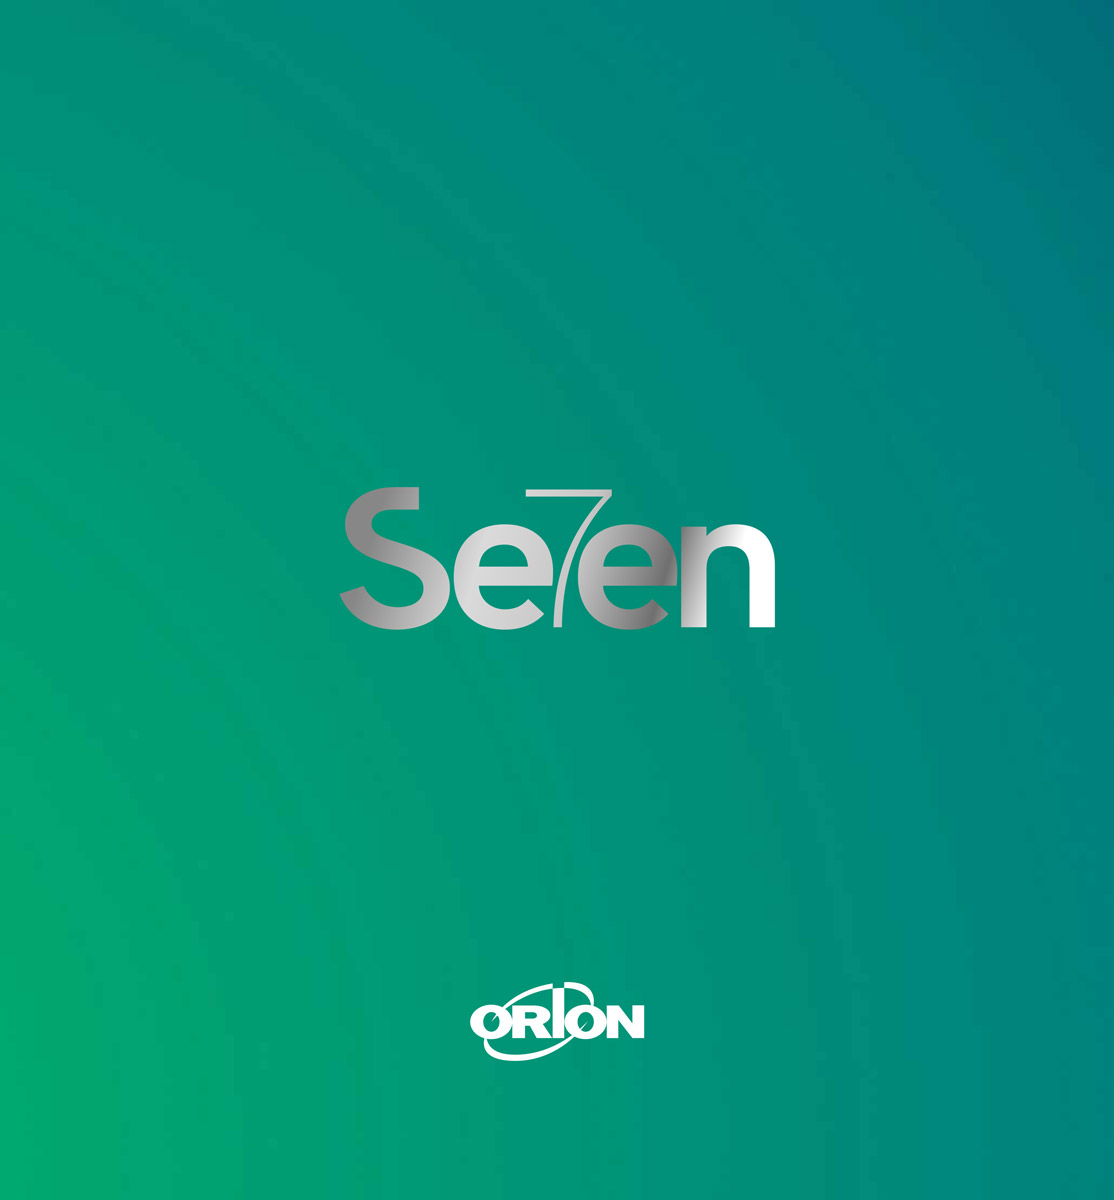 Orion – Seven